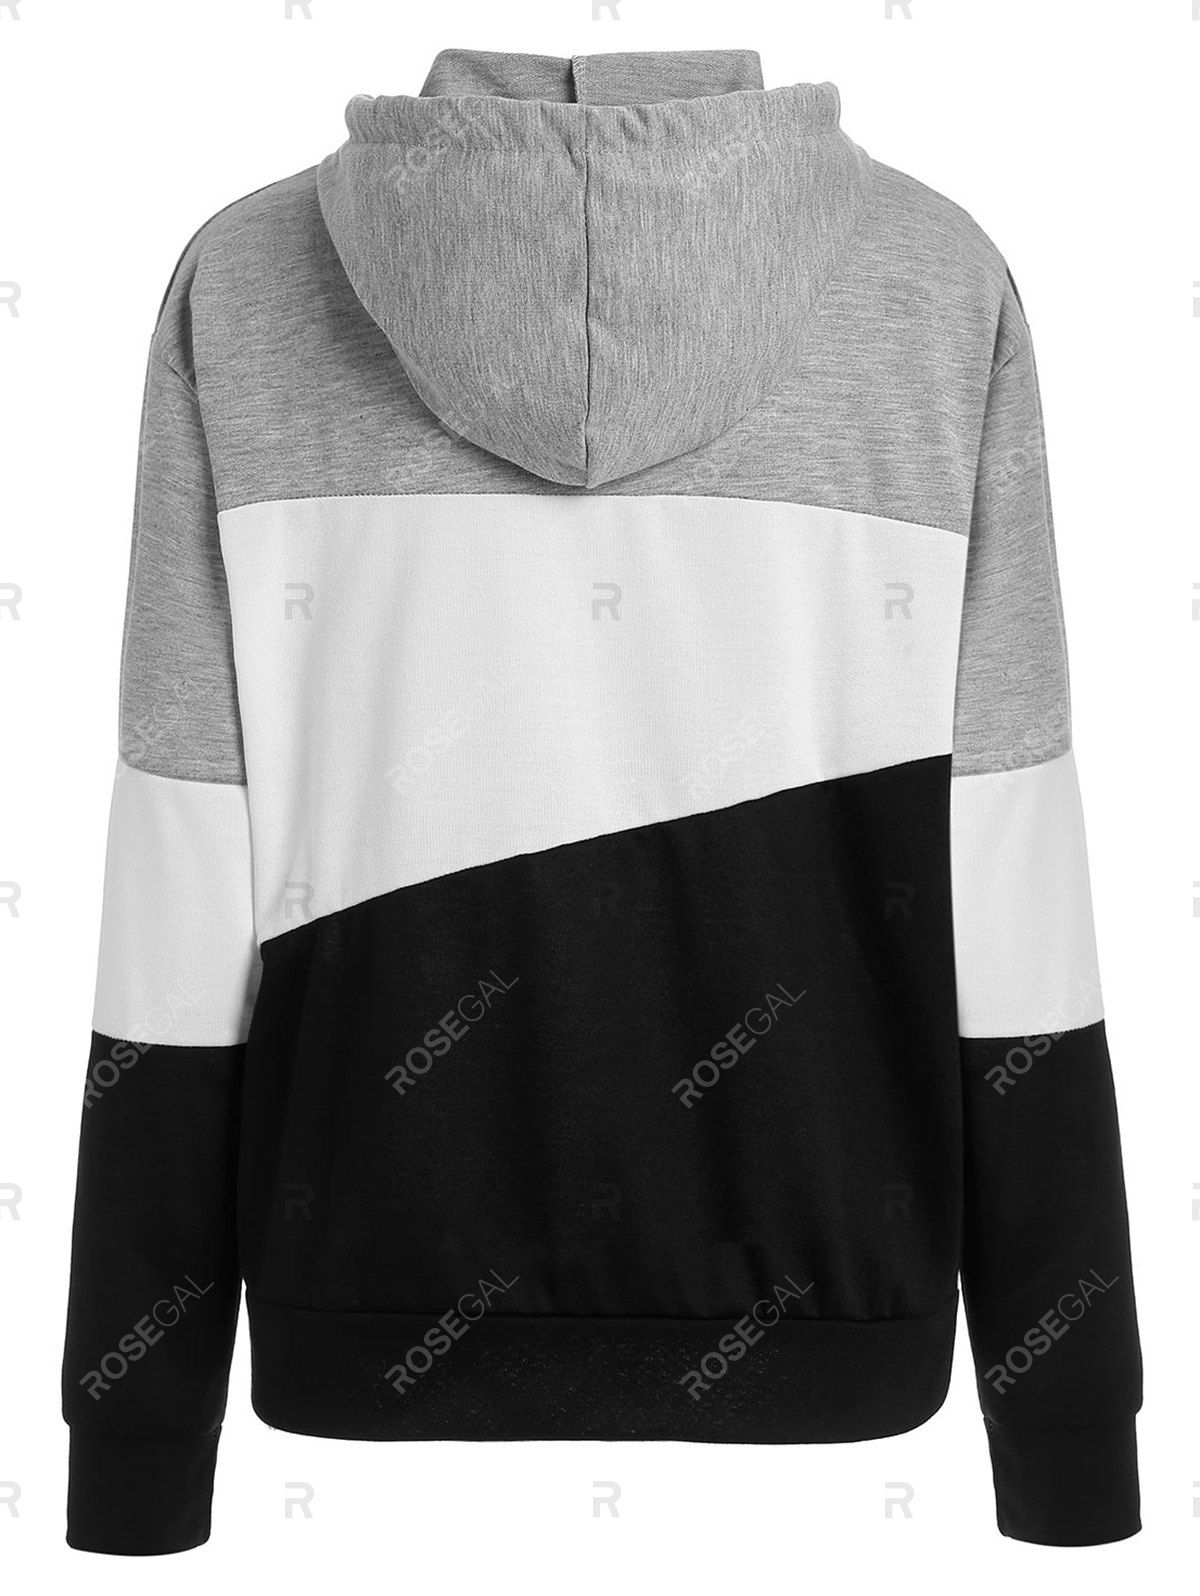 https://www.rosegal.com/sweatshirts-hoodies/pullover-drop-shoulder-hoodie-with-color-block-2402096.html?lkid=16127505